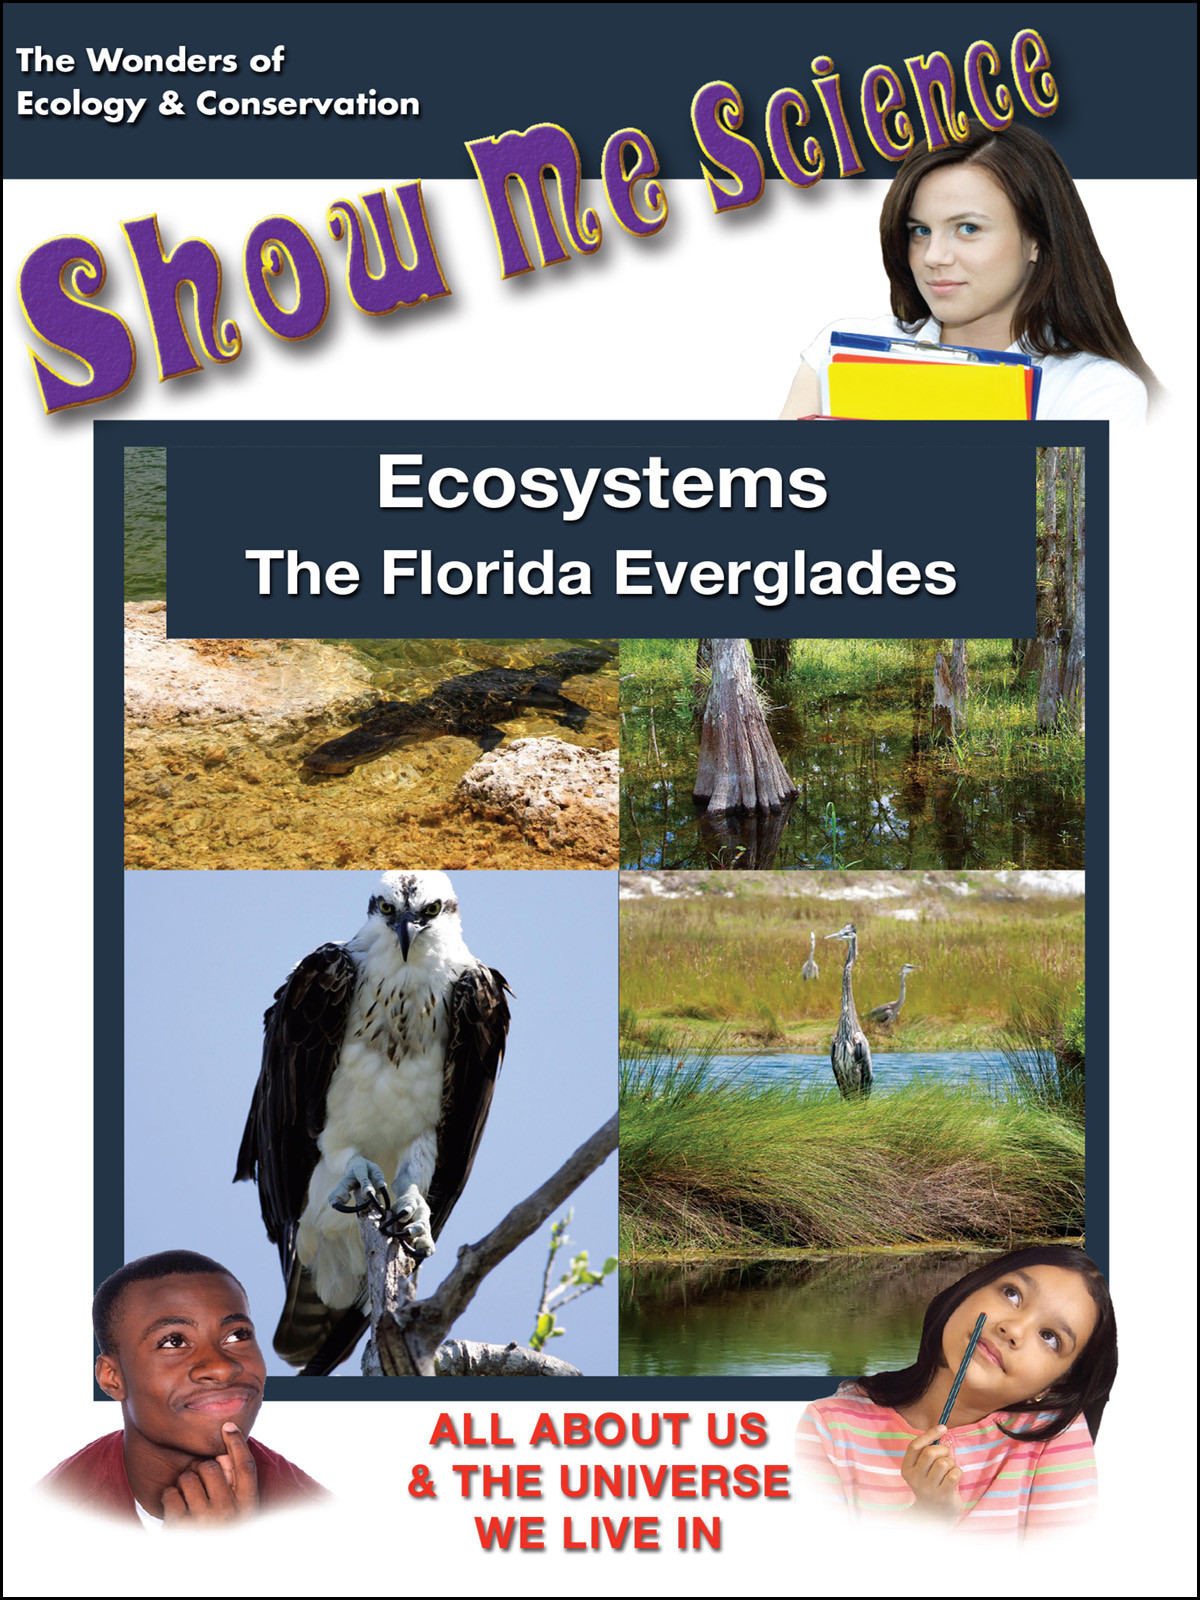 K4617 - Ecosystems The Florida Everglades